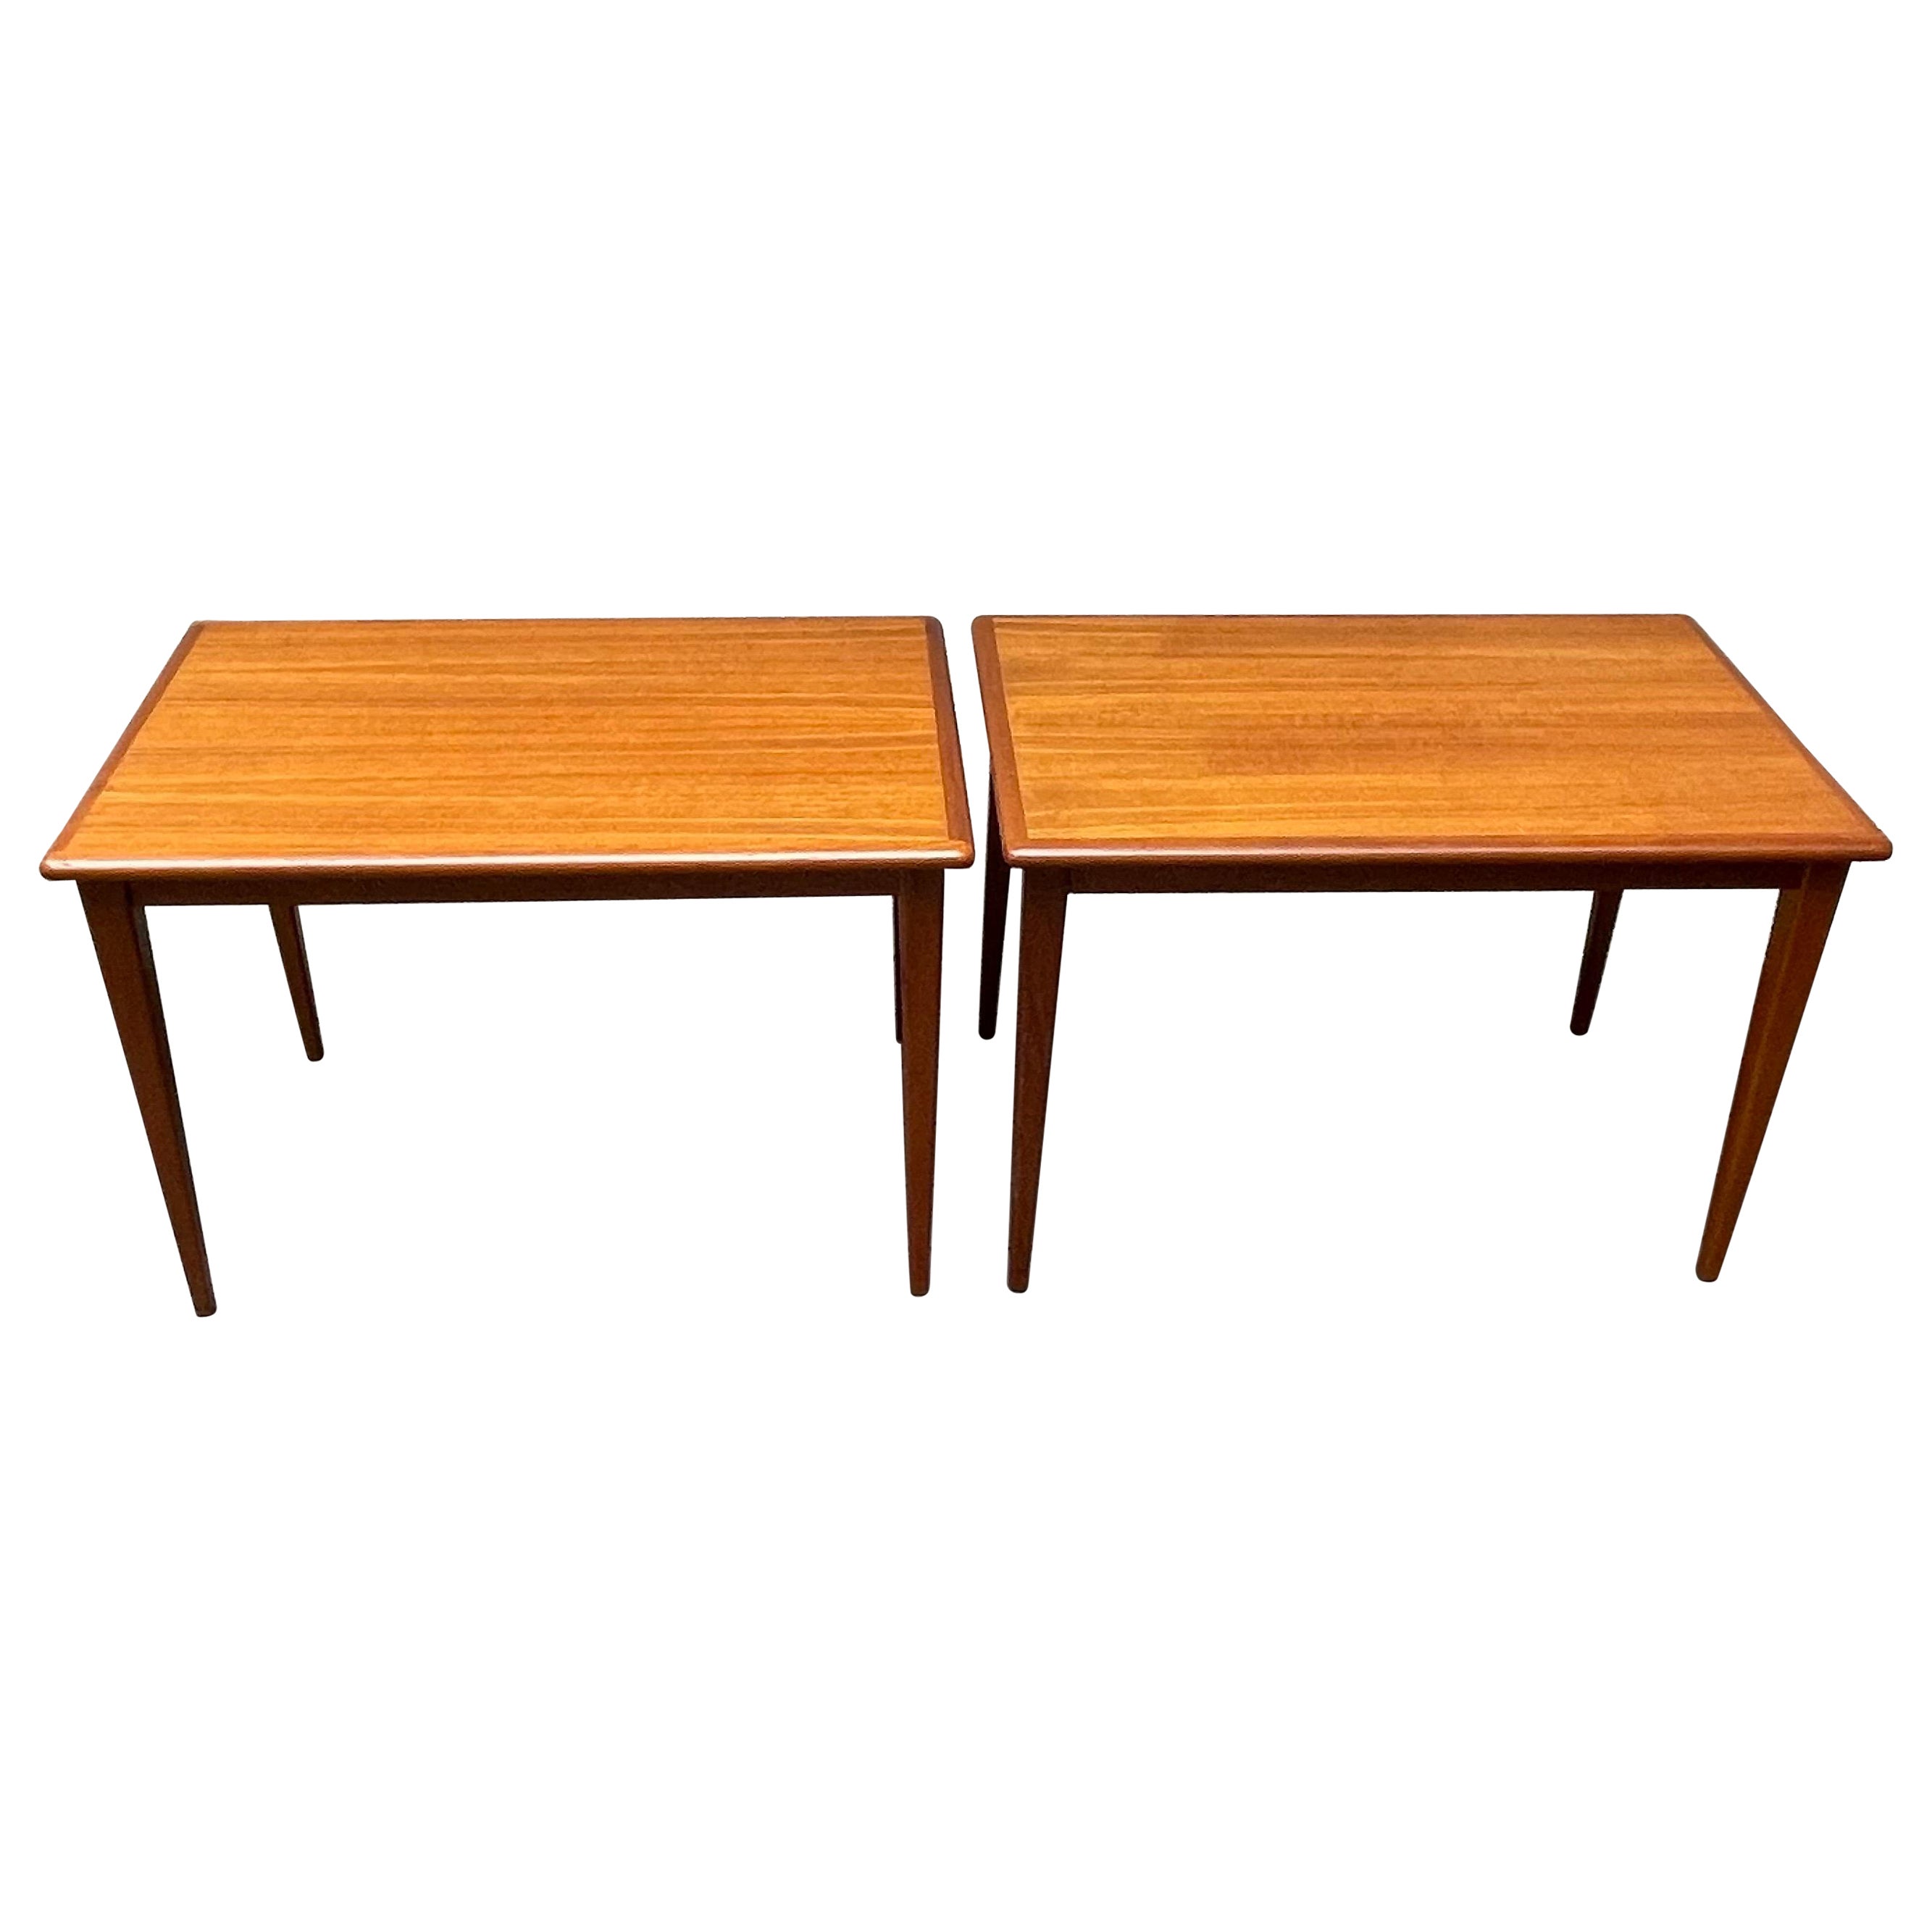 Pair of Mid-Century Modern Teak Side Tables or End Tables, Denmark, 1960's